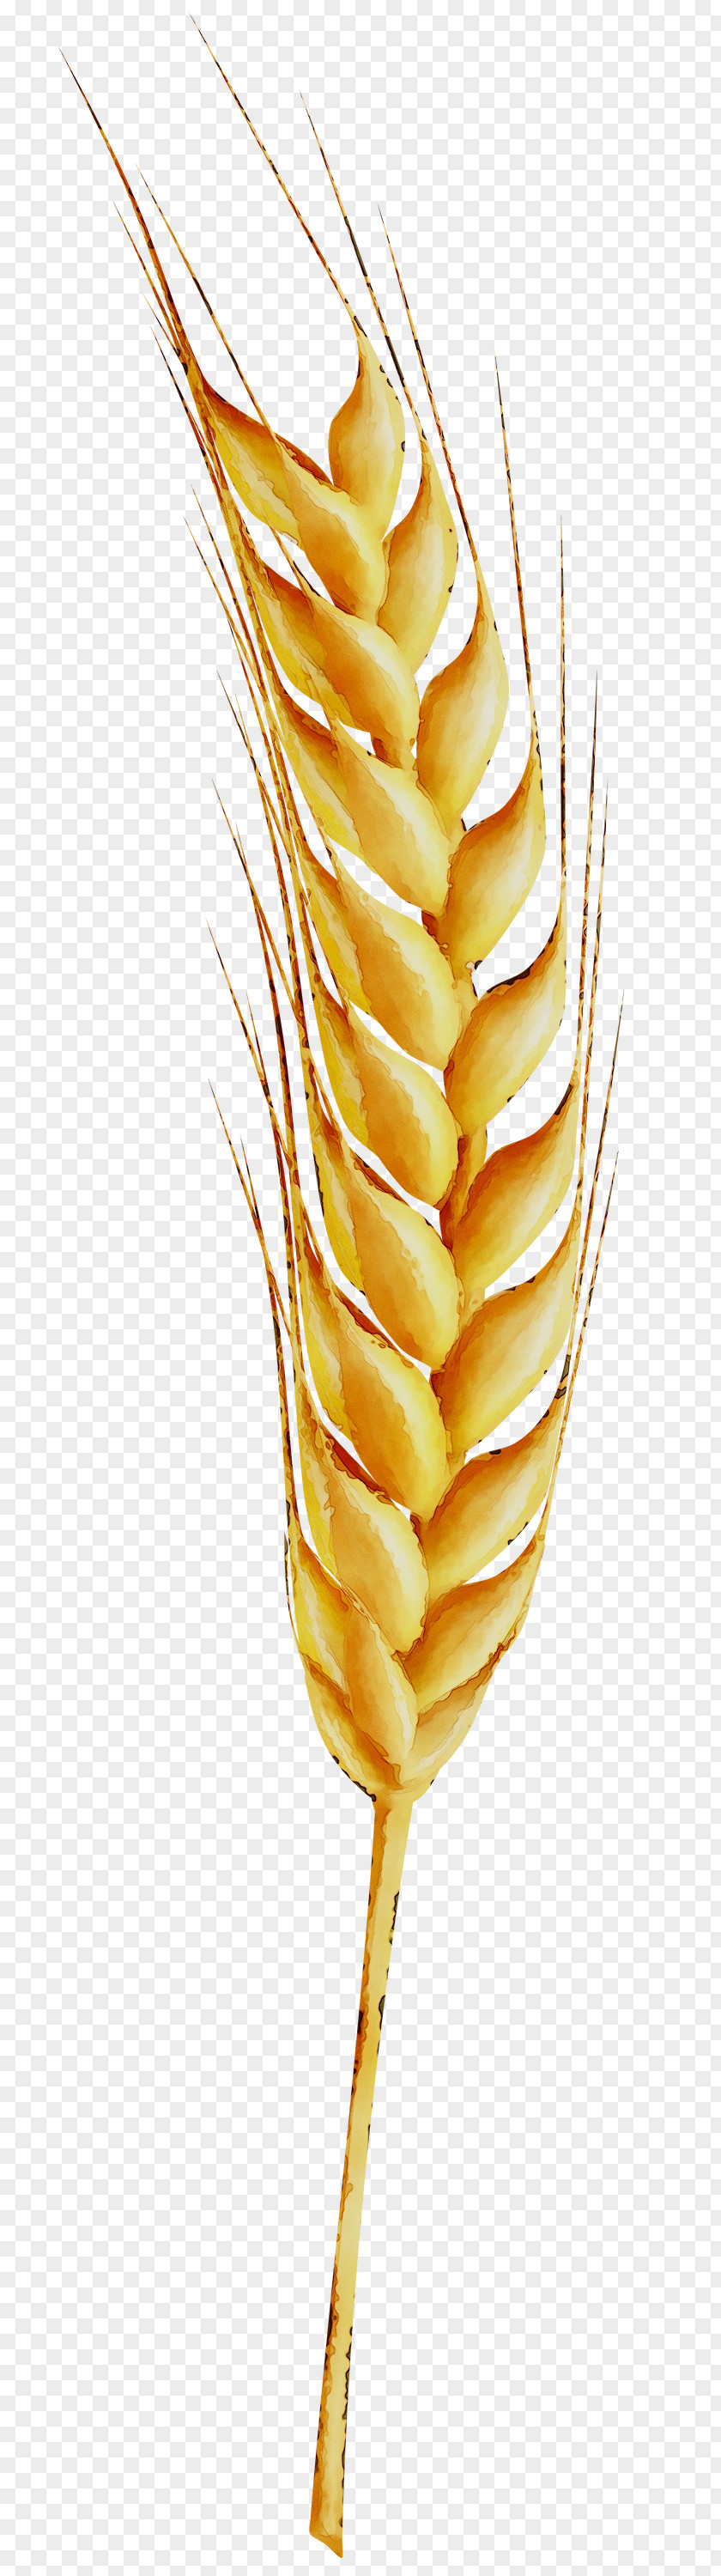 Grasses Wheat Grain Image PNG